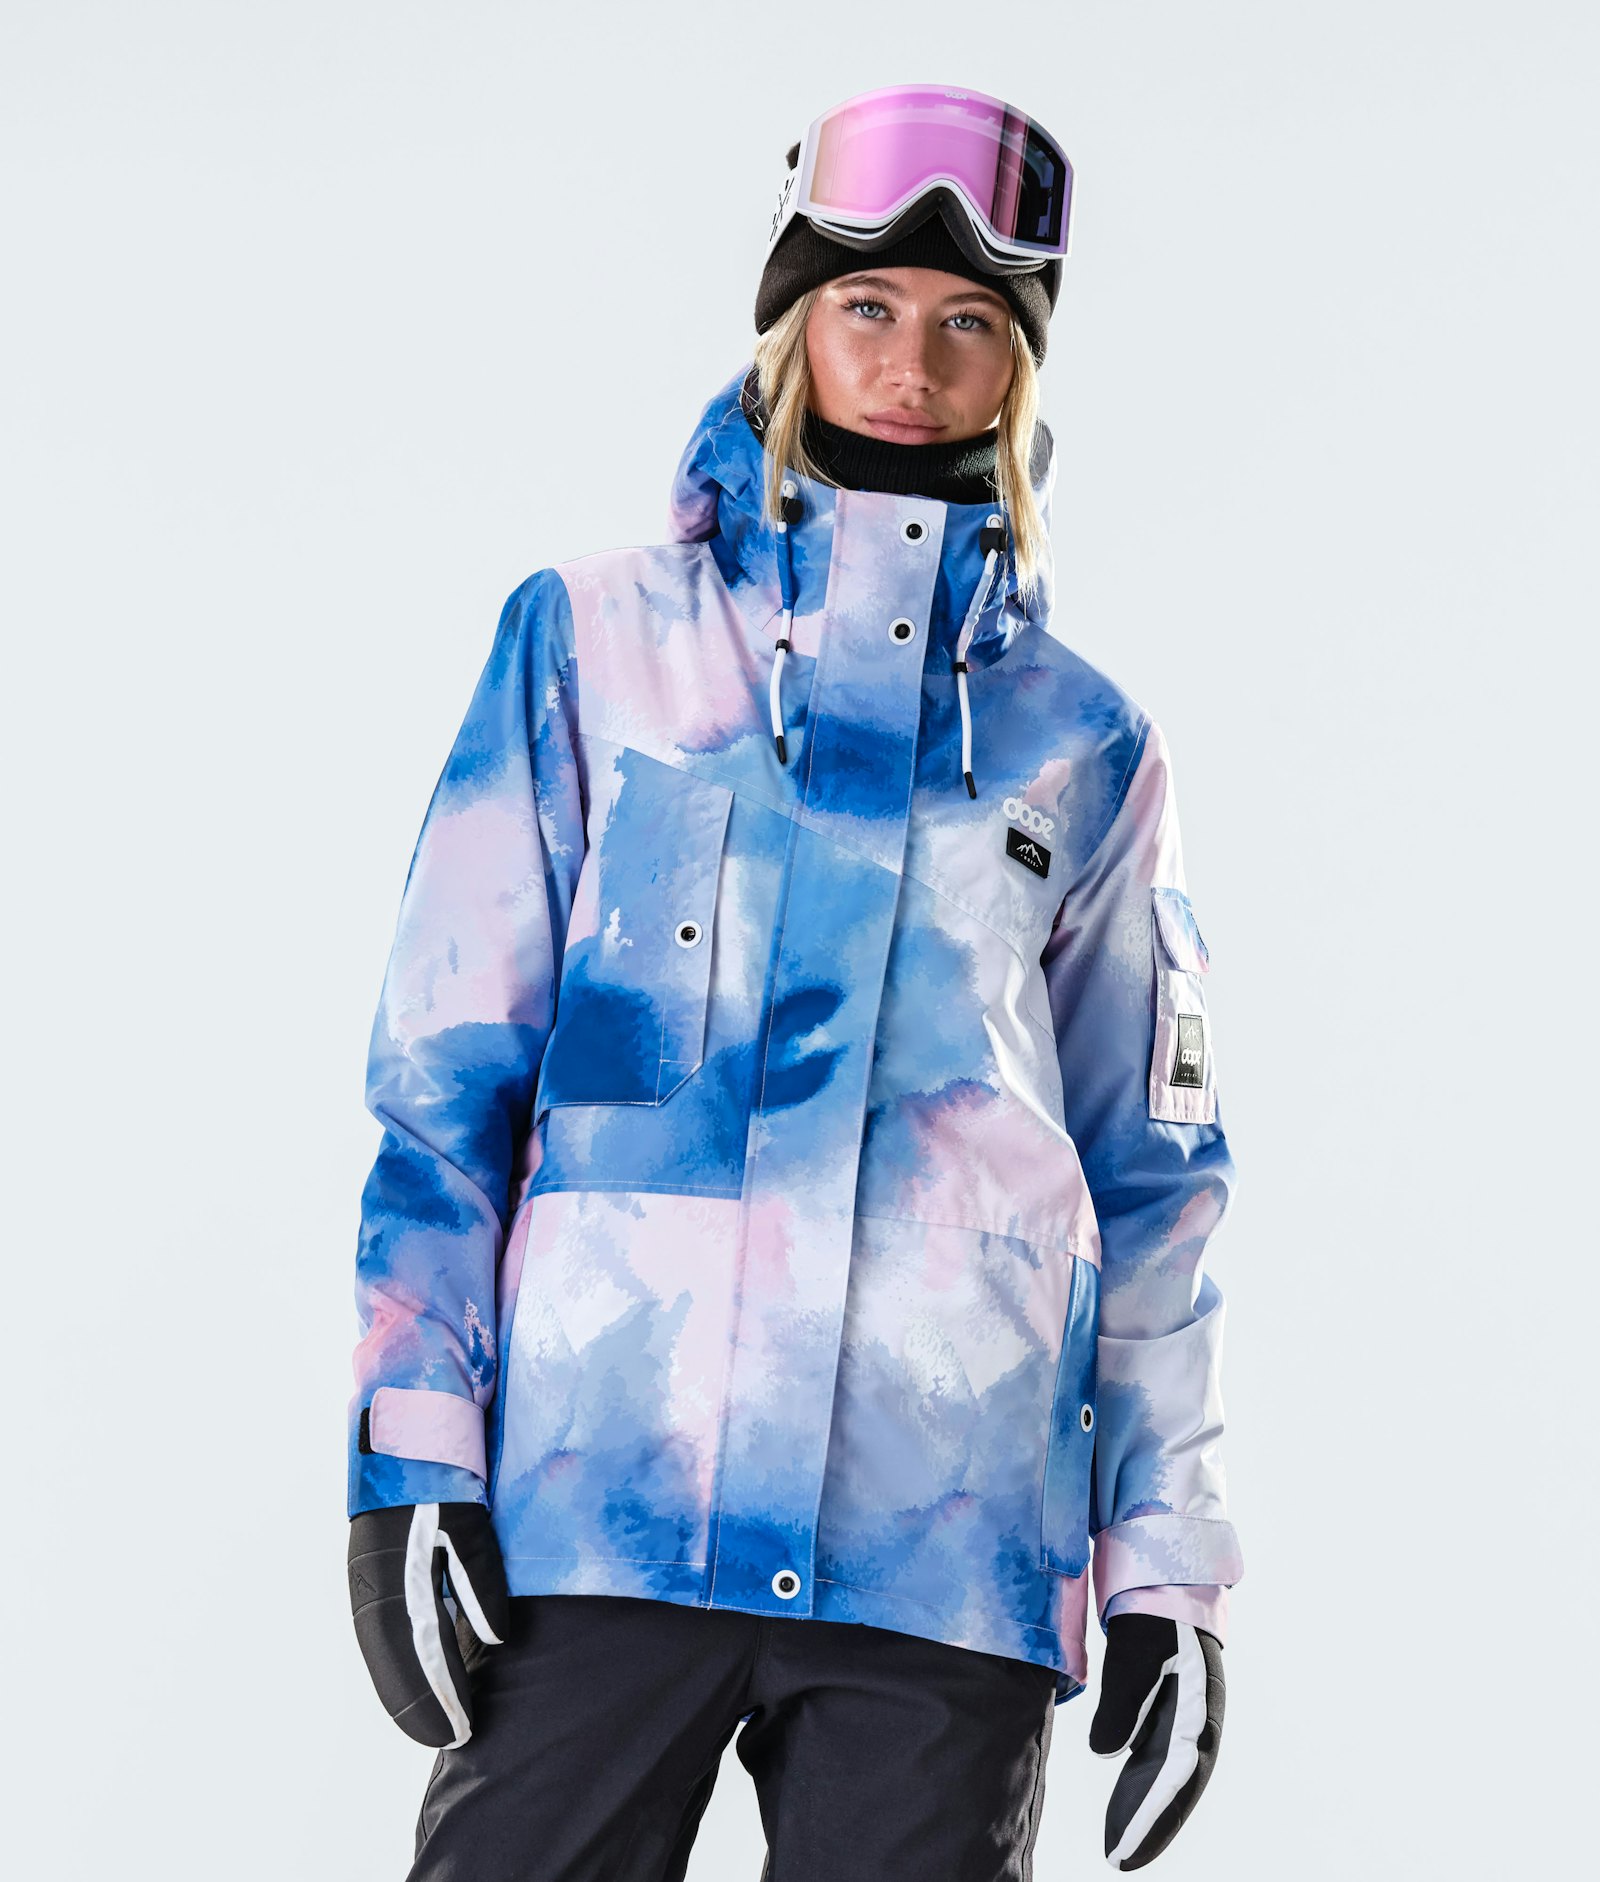 Adept W 2020 Ski Jacket Women Cloud